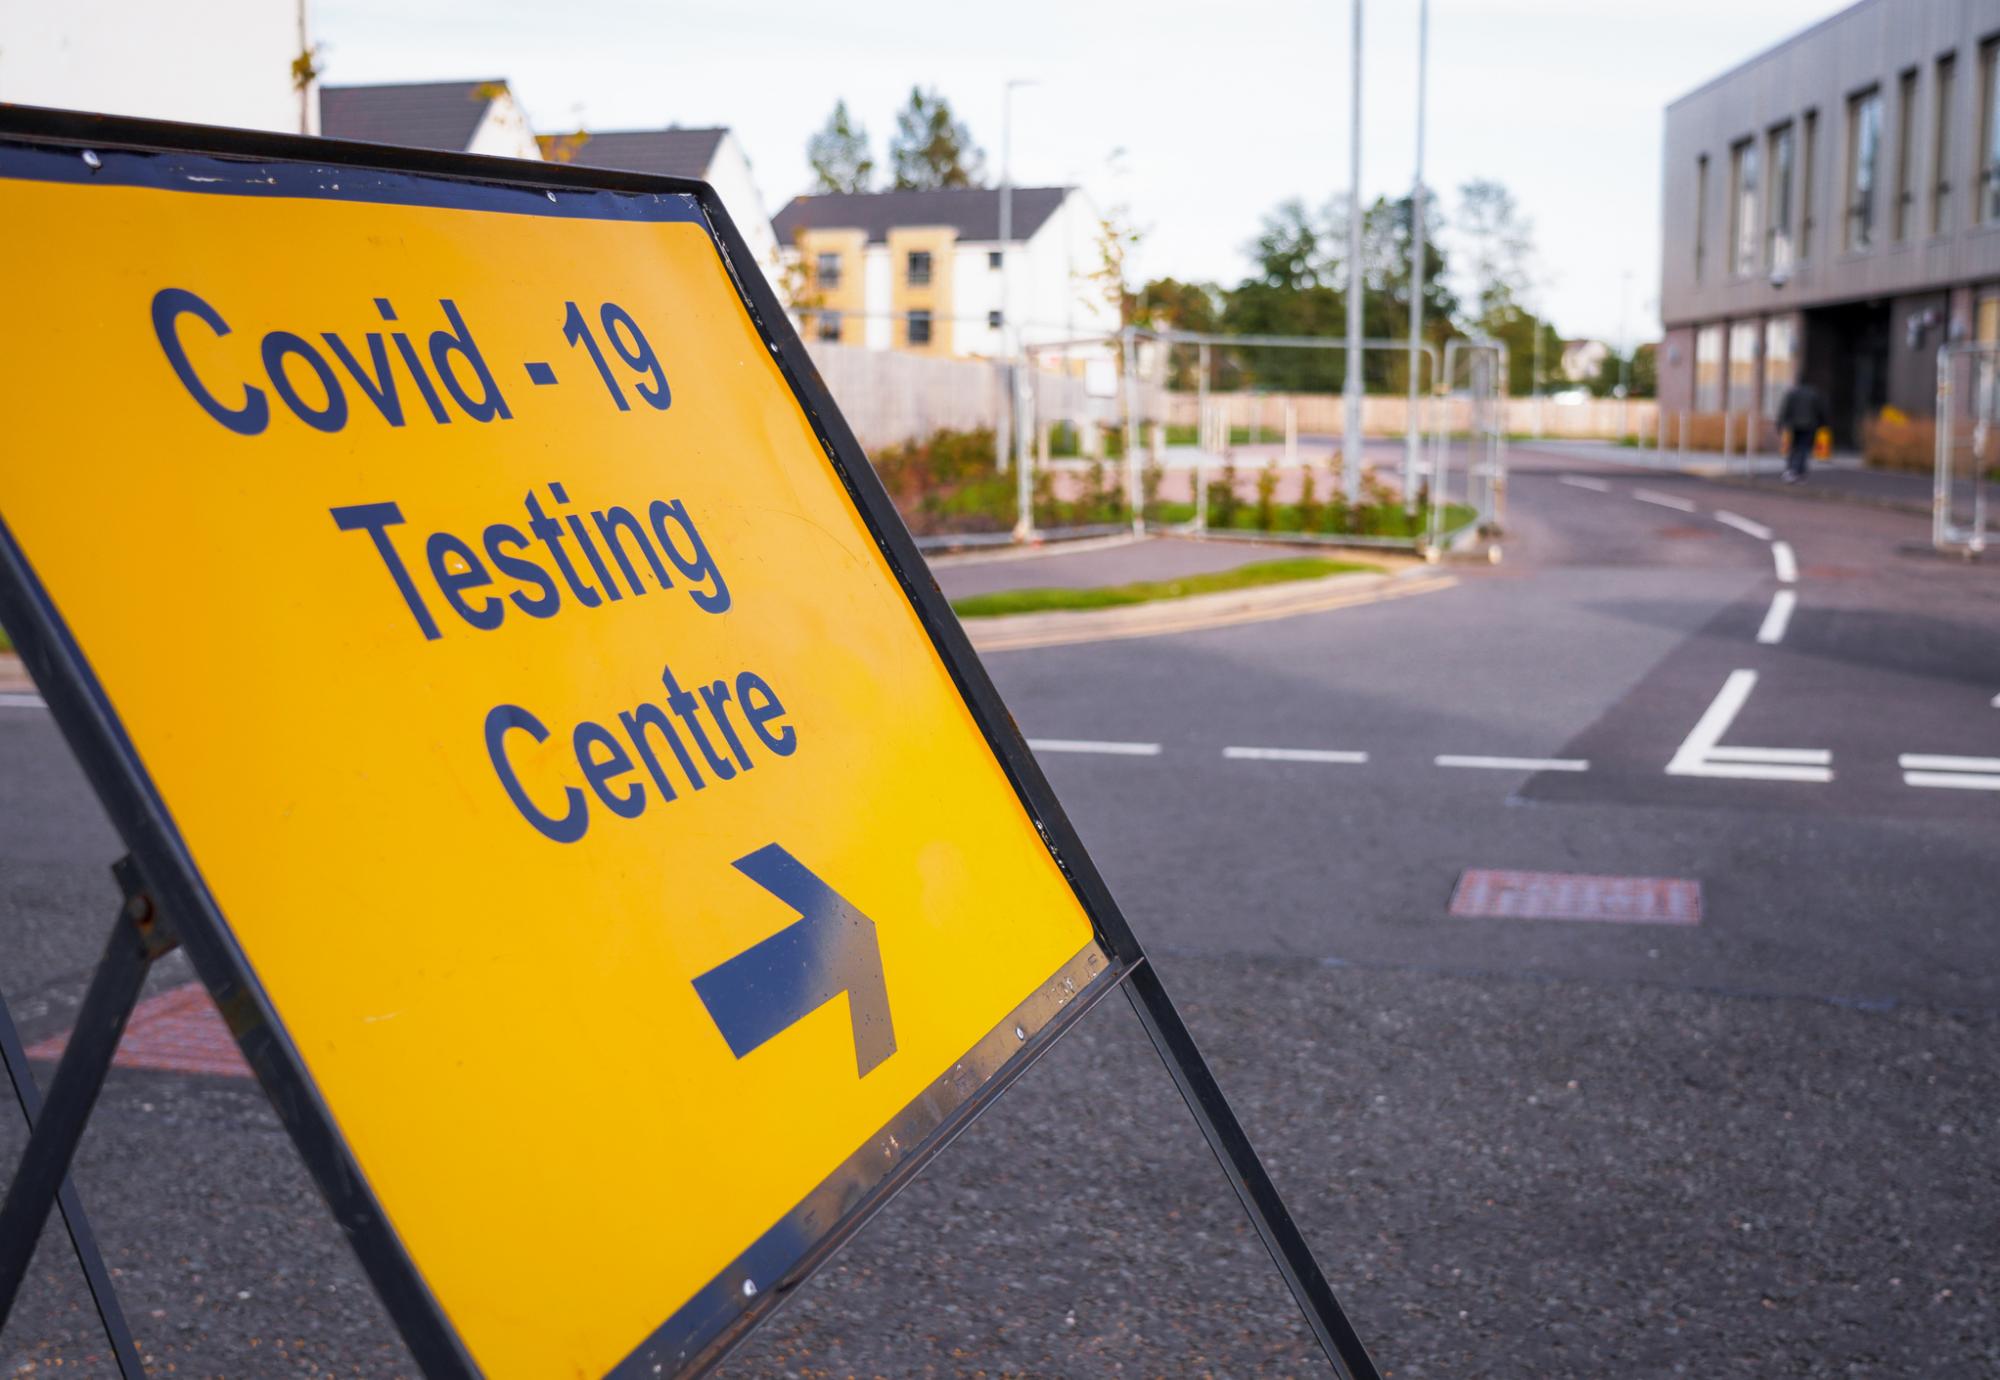 Covid-19 Testing Centre sign